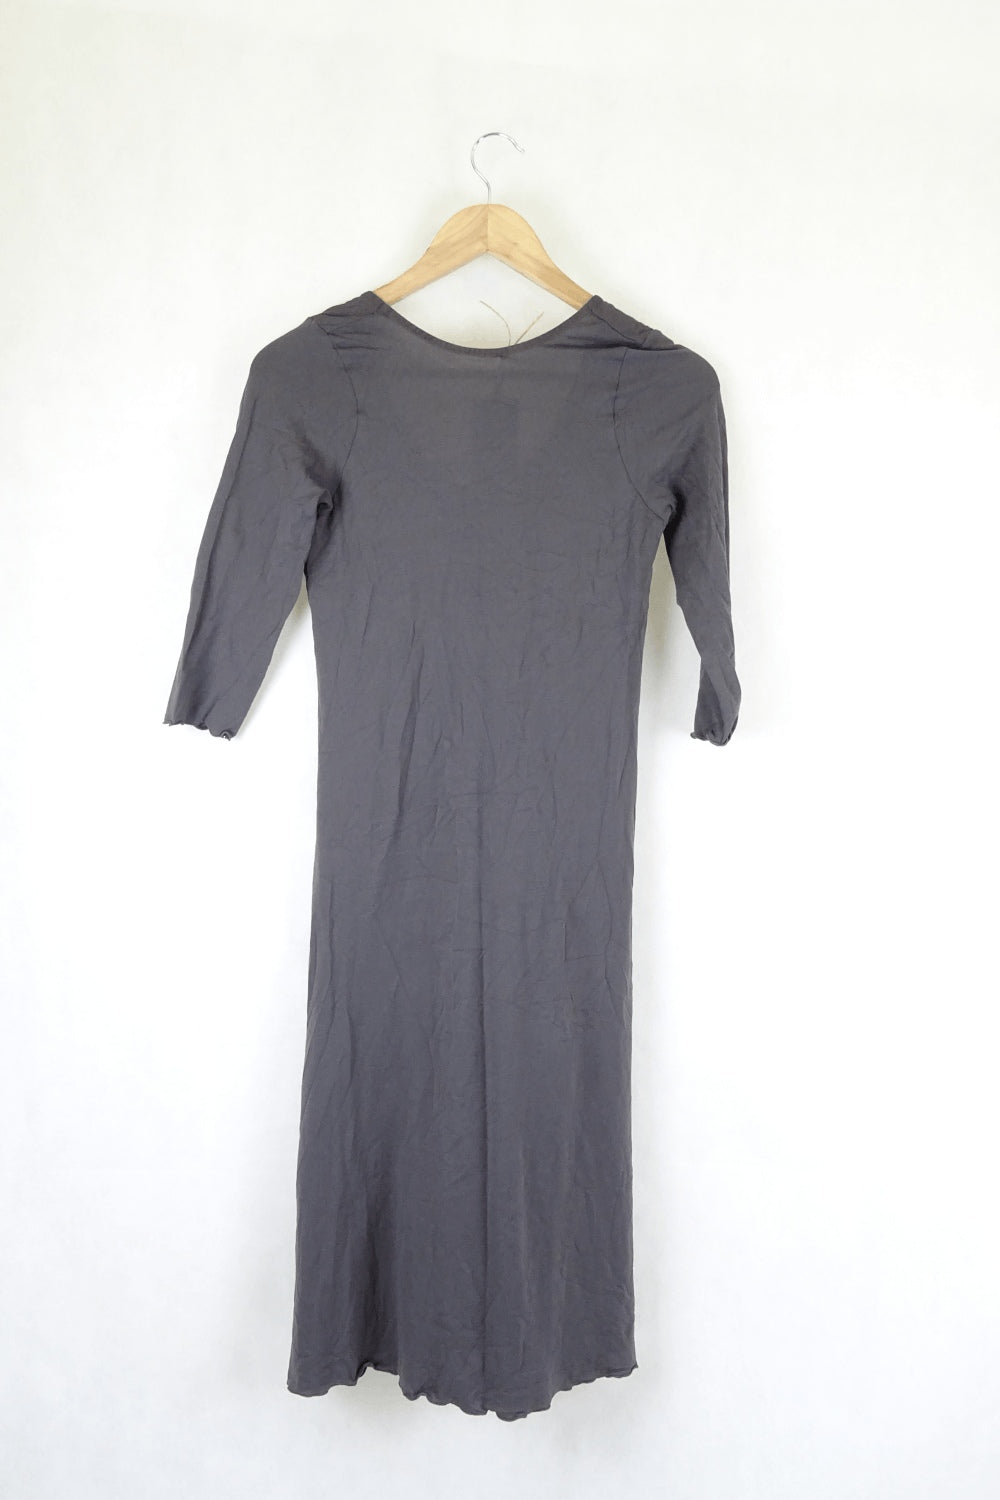 Vigorella Charcoal Dress S